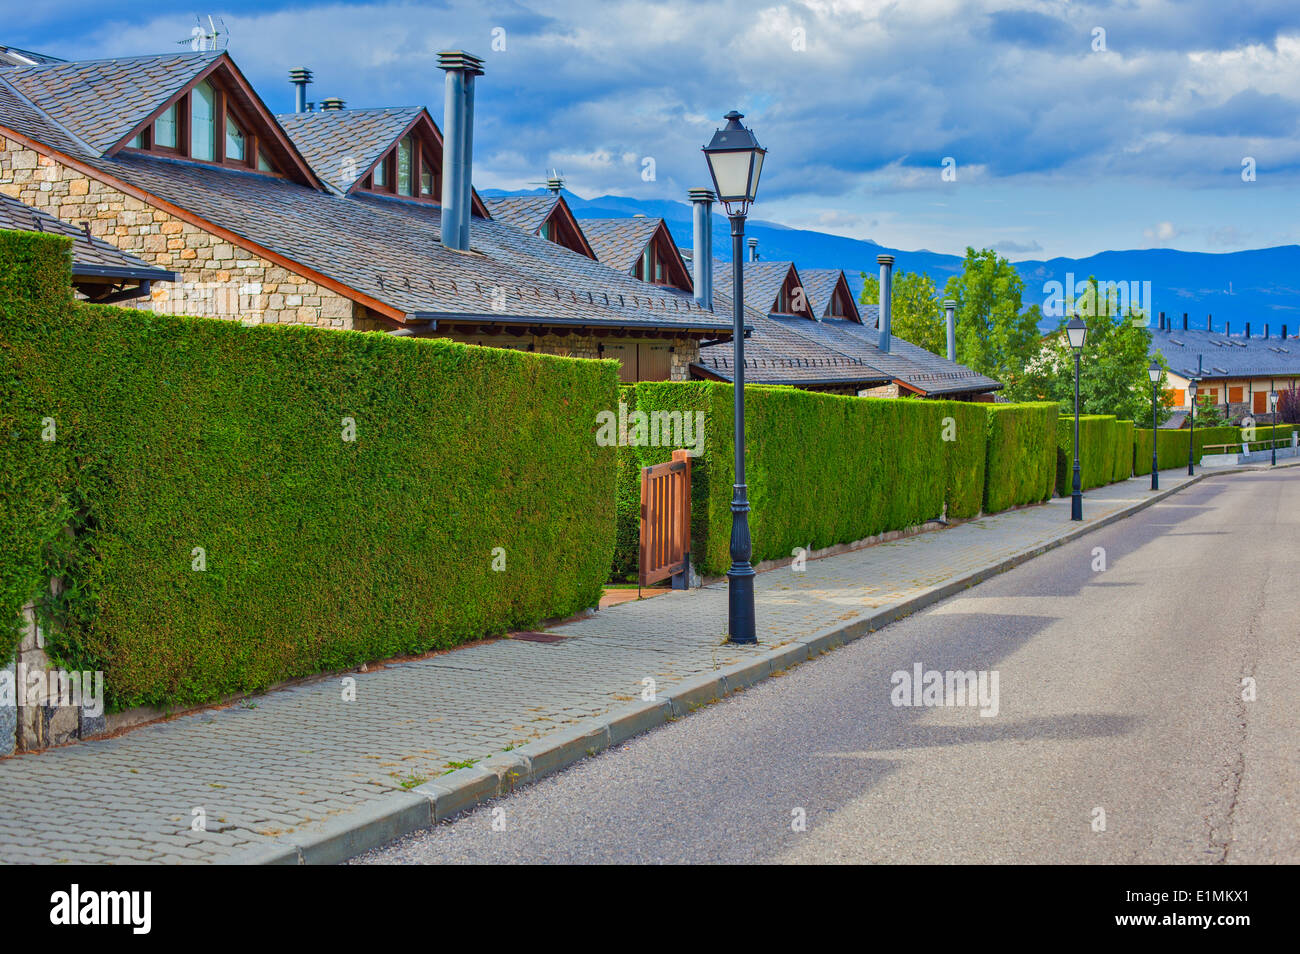 Saubere Straße in Stadt Europas. Stockfoto